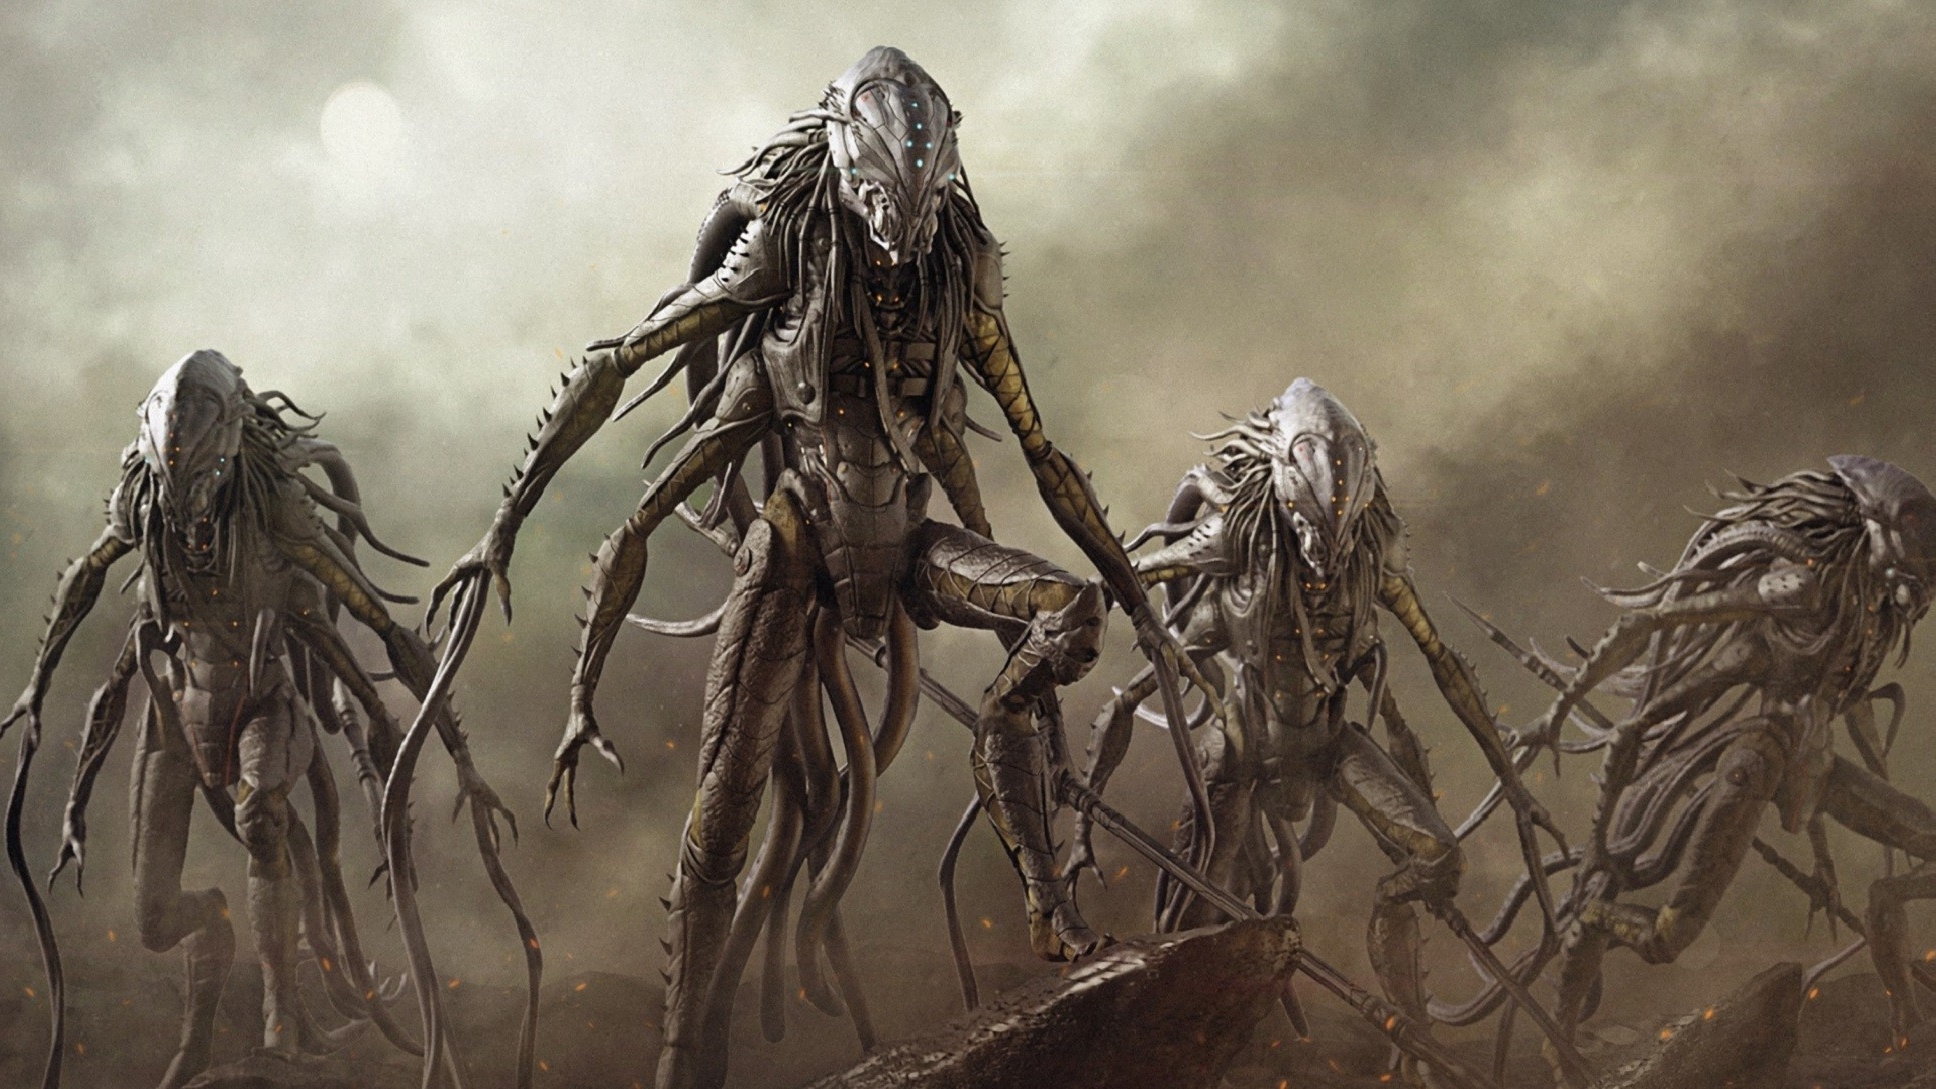 The Aliens by Riyahd Cassiem